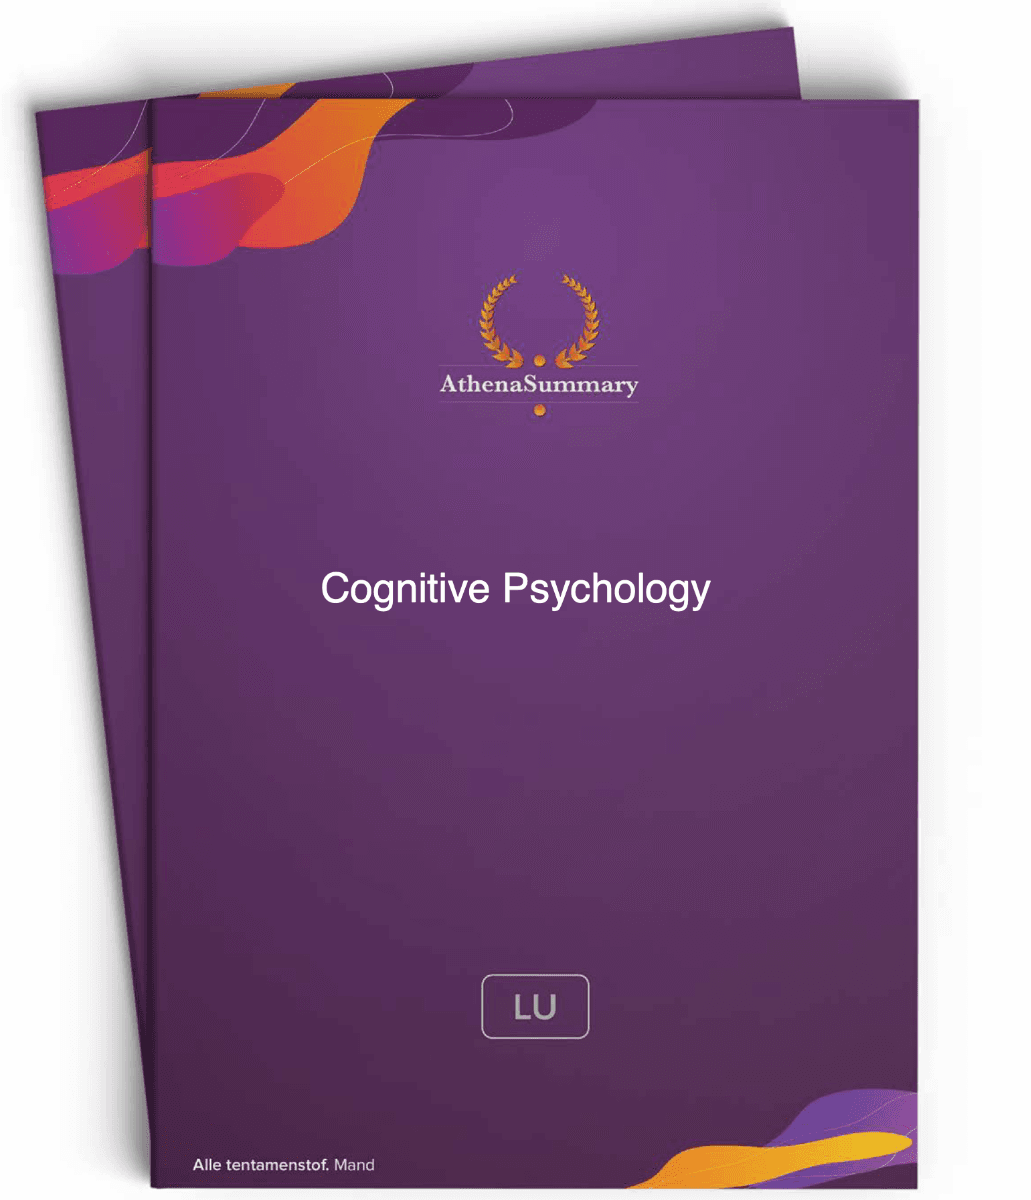 Literature Summary - Cognitive Psychology